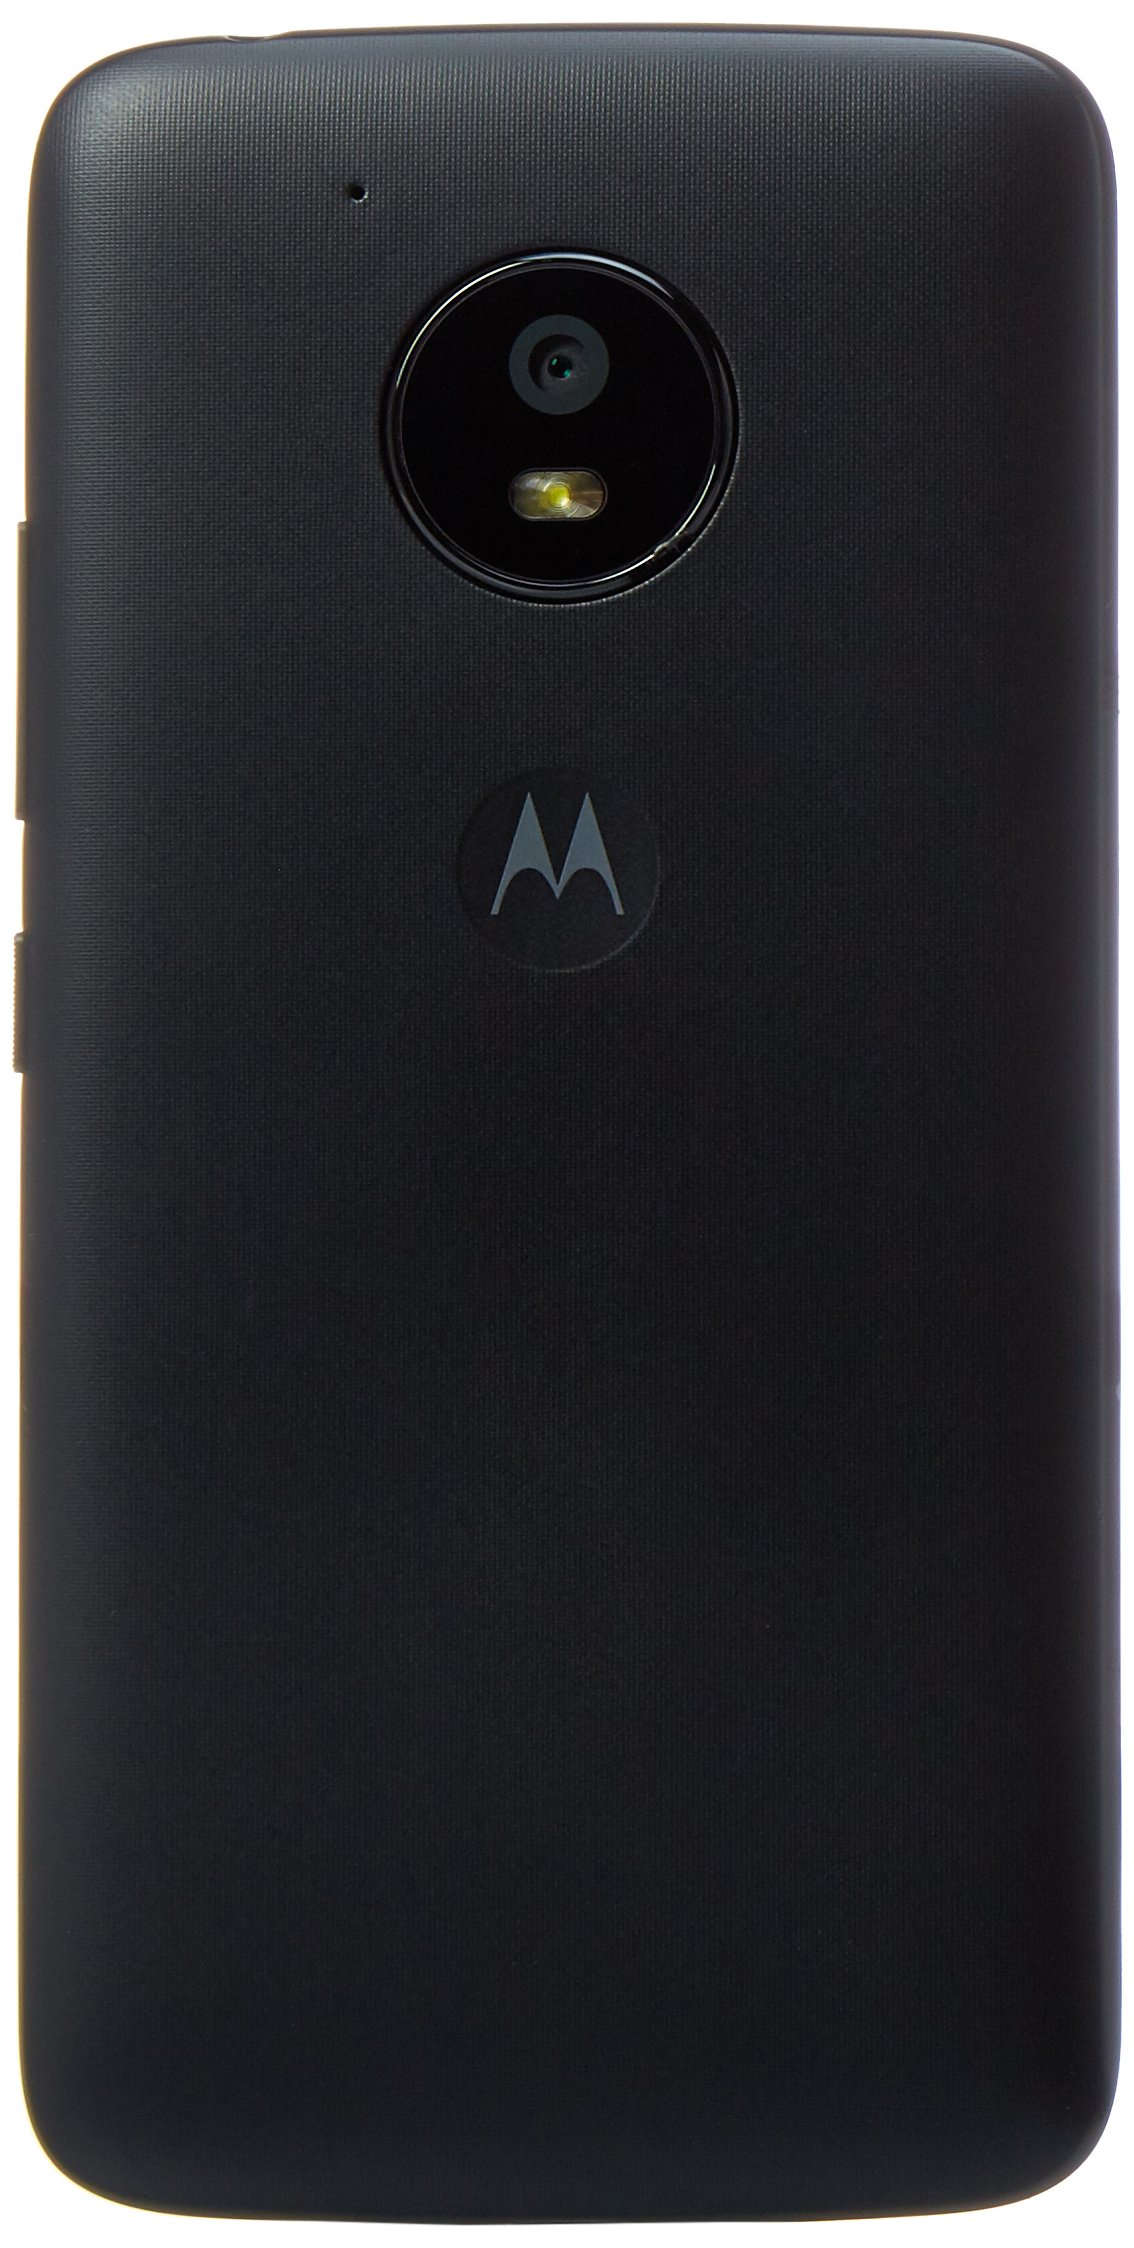 Motorola Moto E (4th Gen.) XT1764 16GB Unlocked GSM LTE Android Phone w/ 8MP Camera - Black